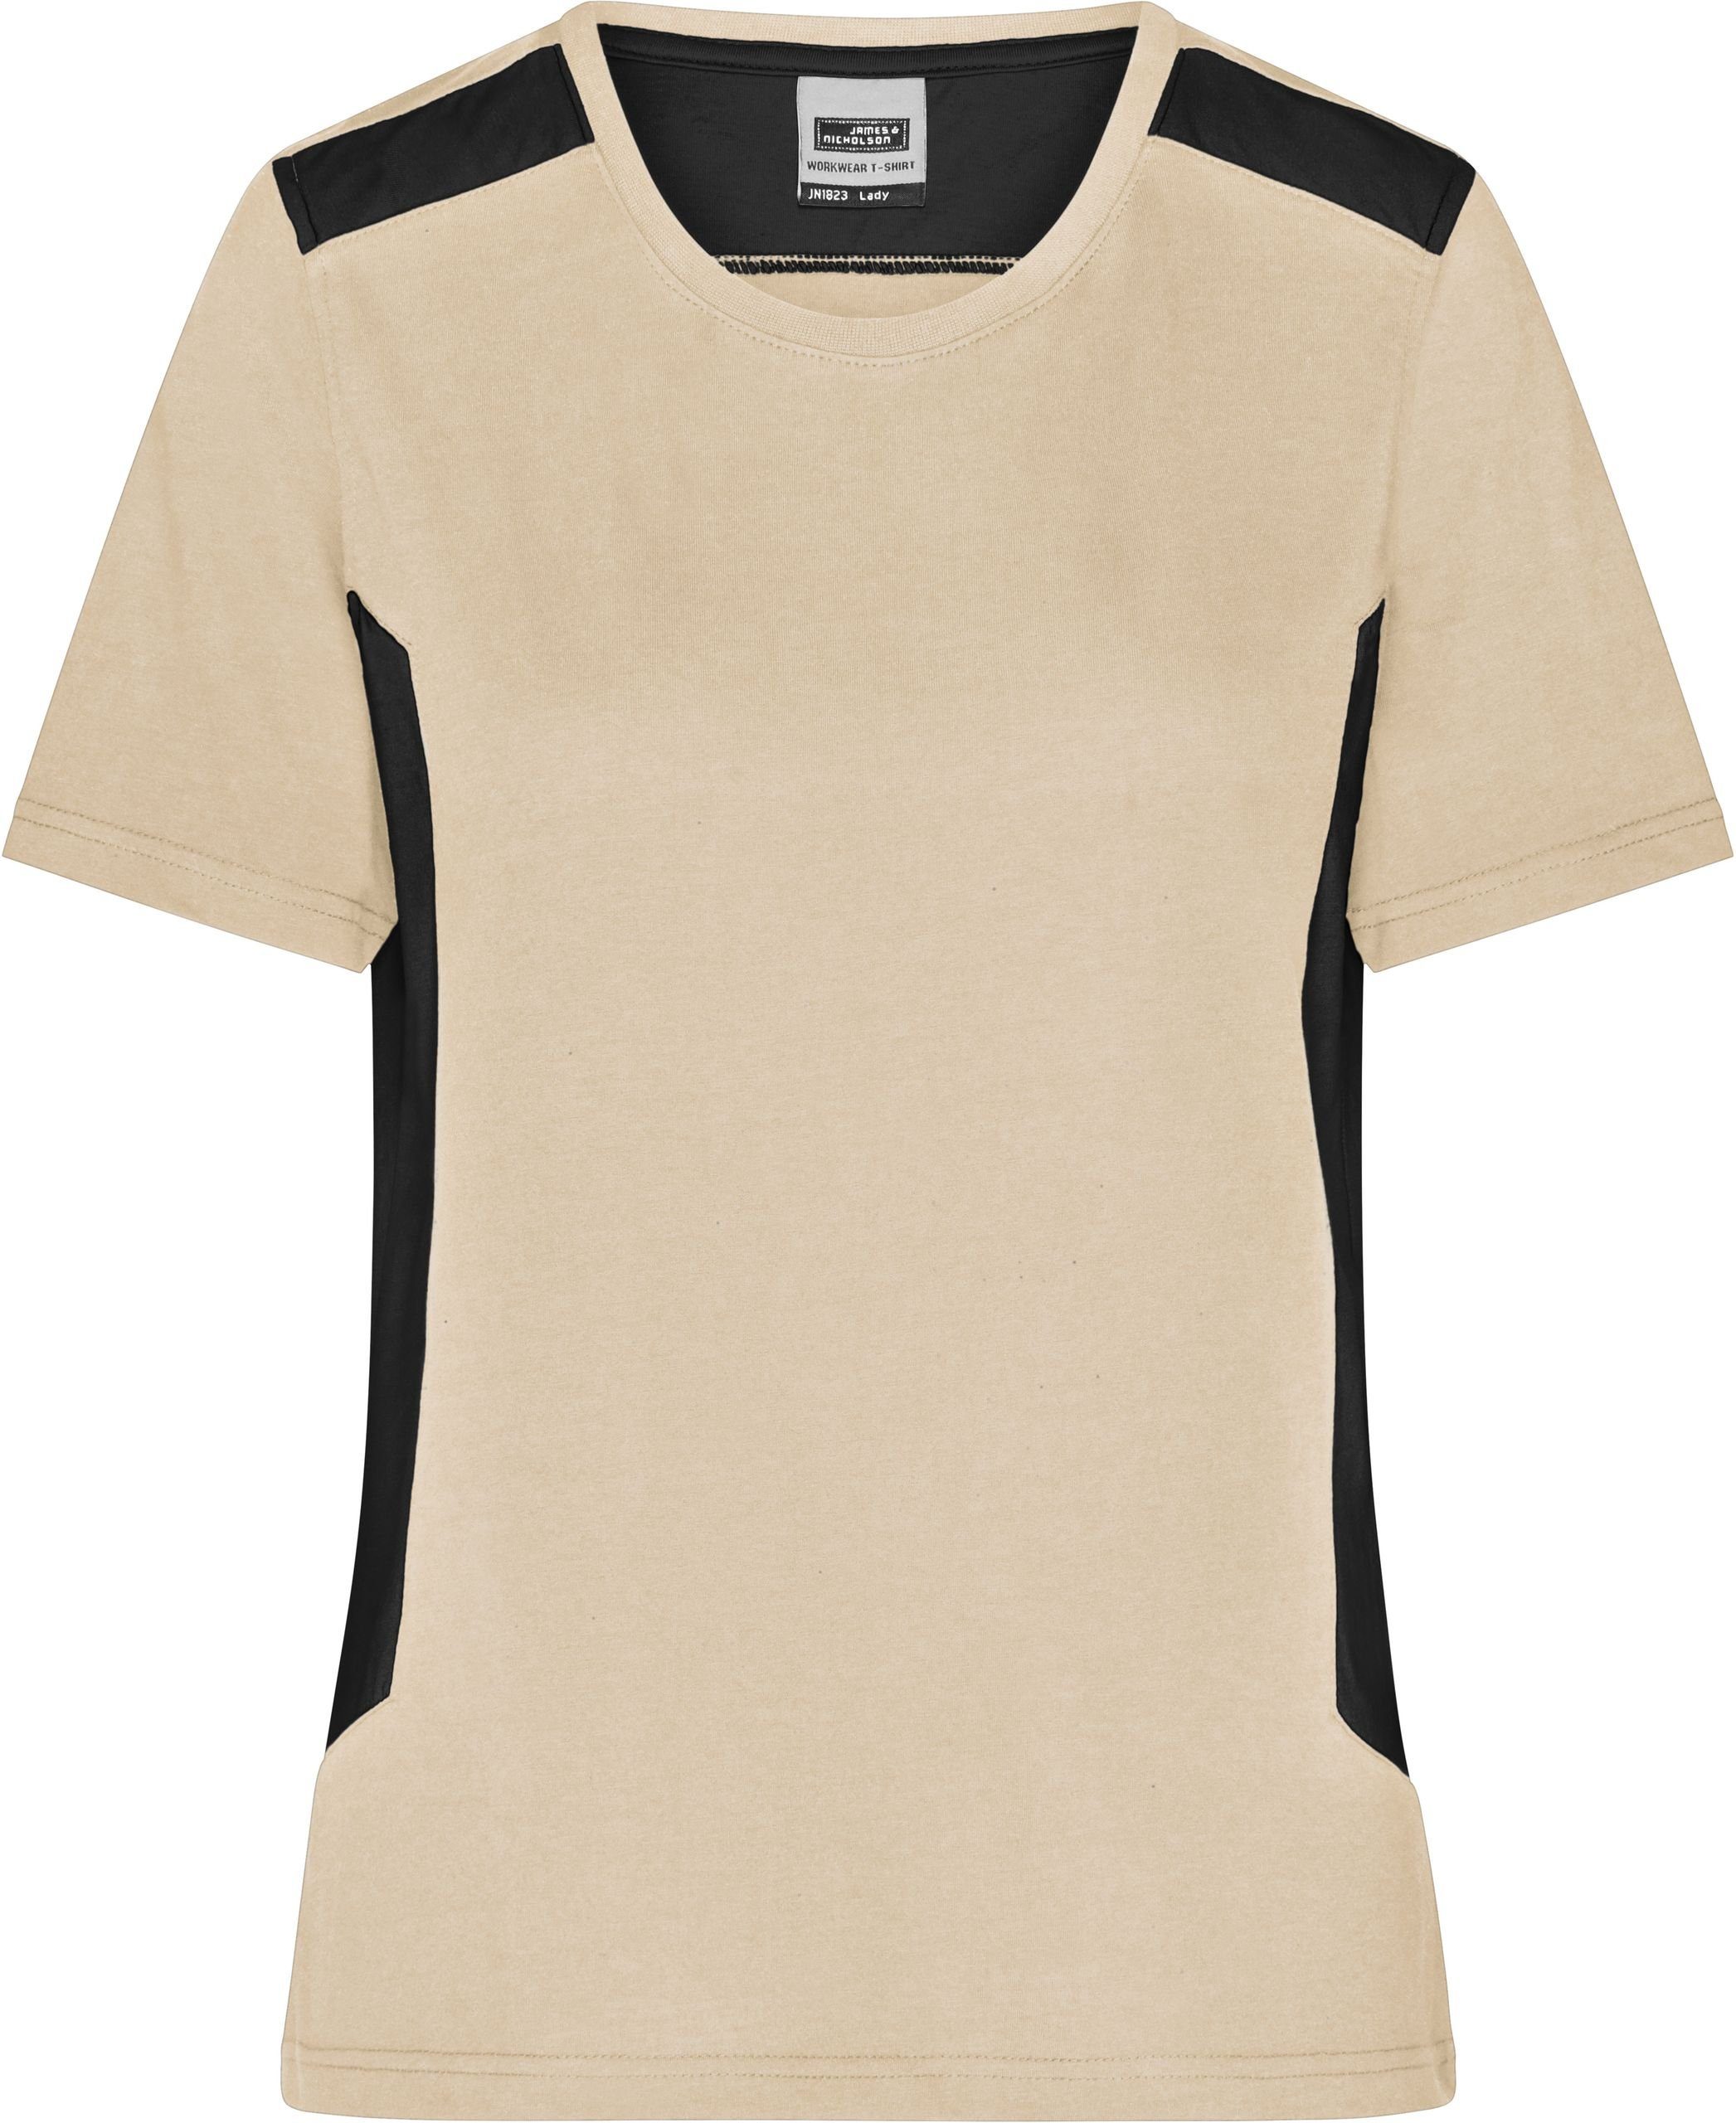 James & Nicholson T-Shirt Strong stone/black - Workwear Damen T-Shirt